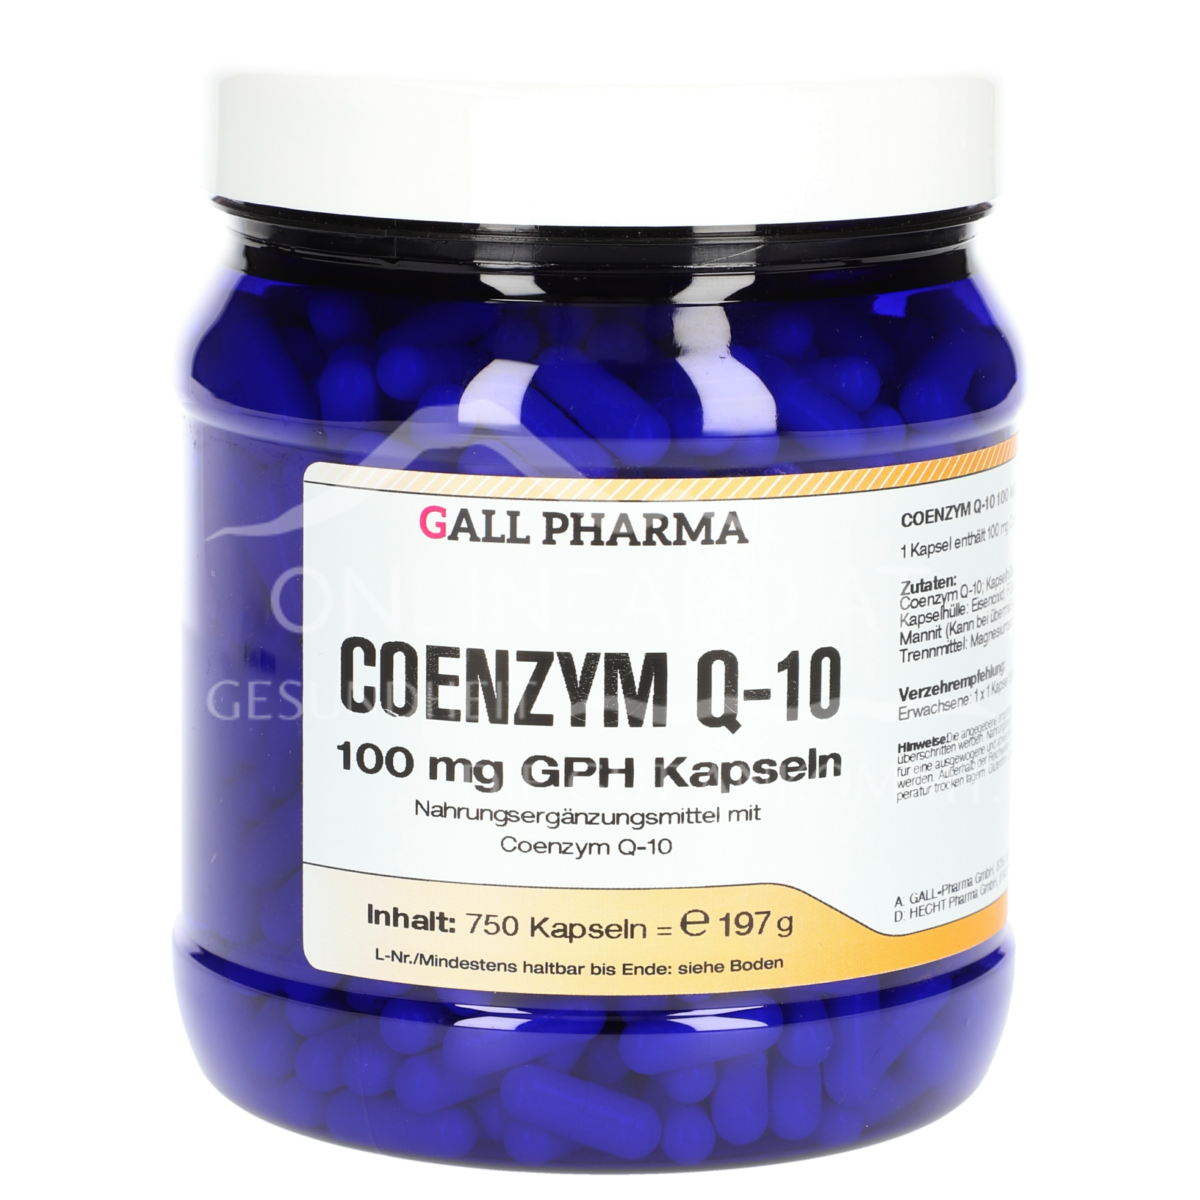 Gall Pharma Coenzym Q-10 100 mg Kapseln